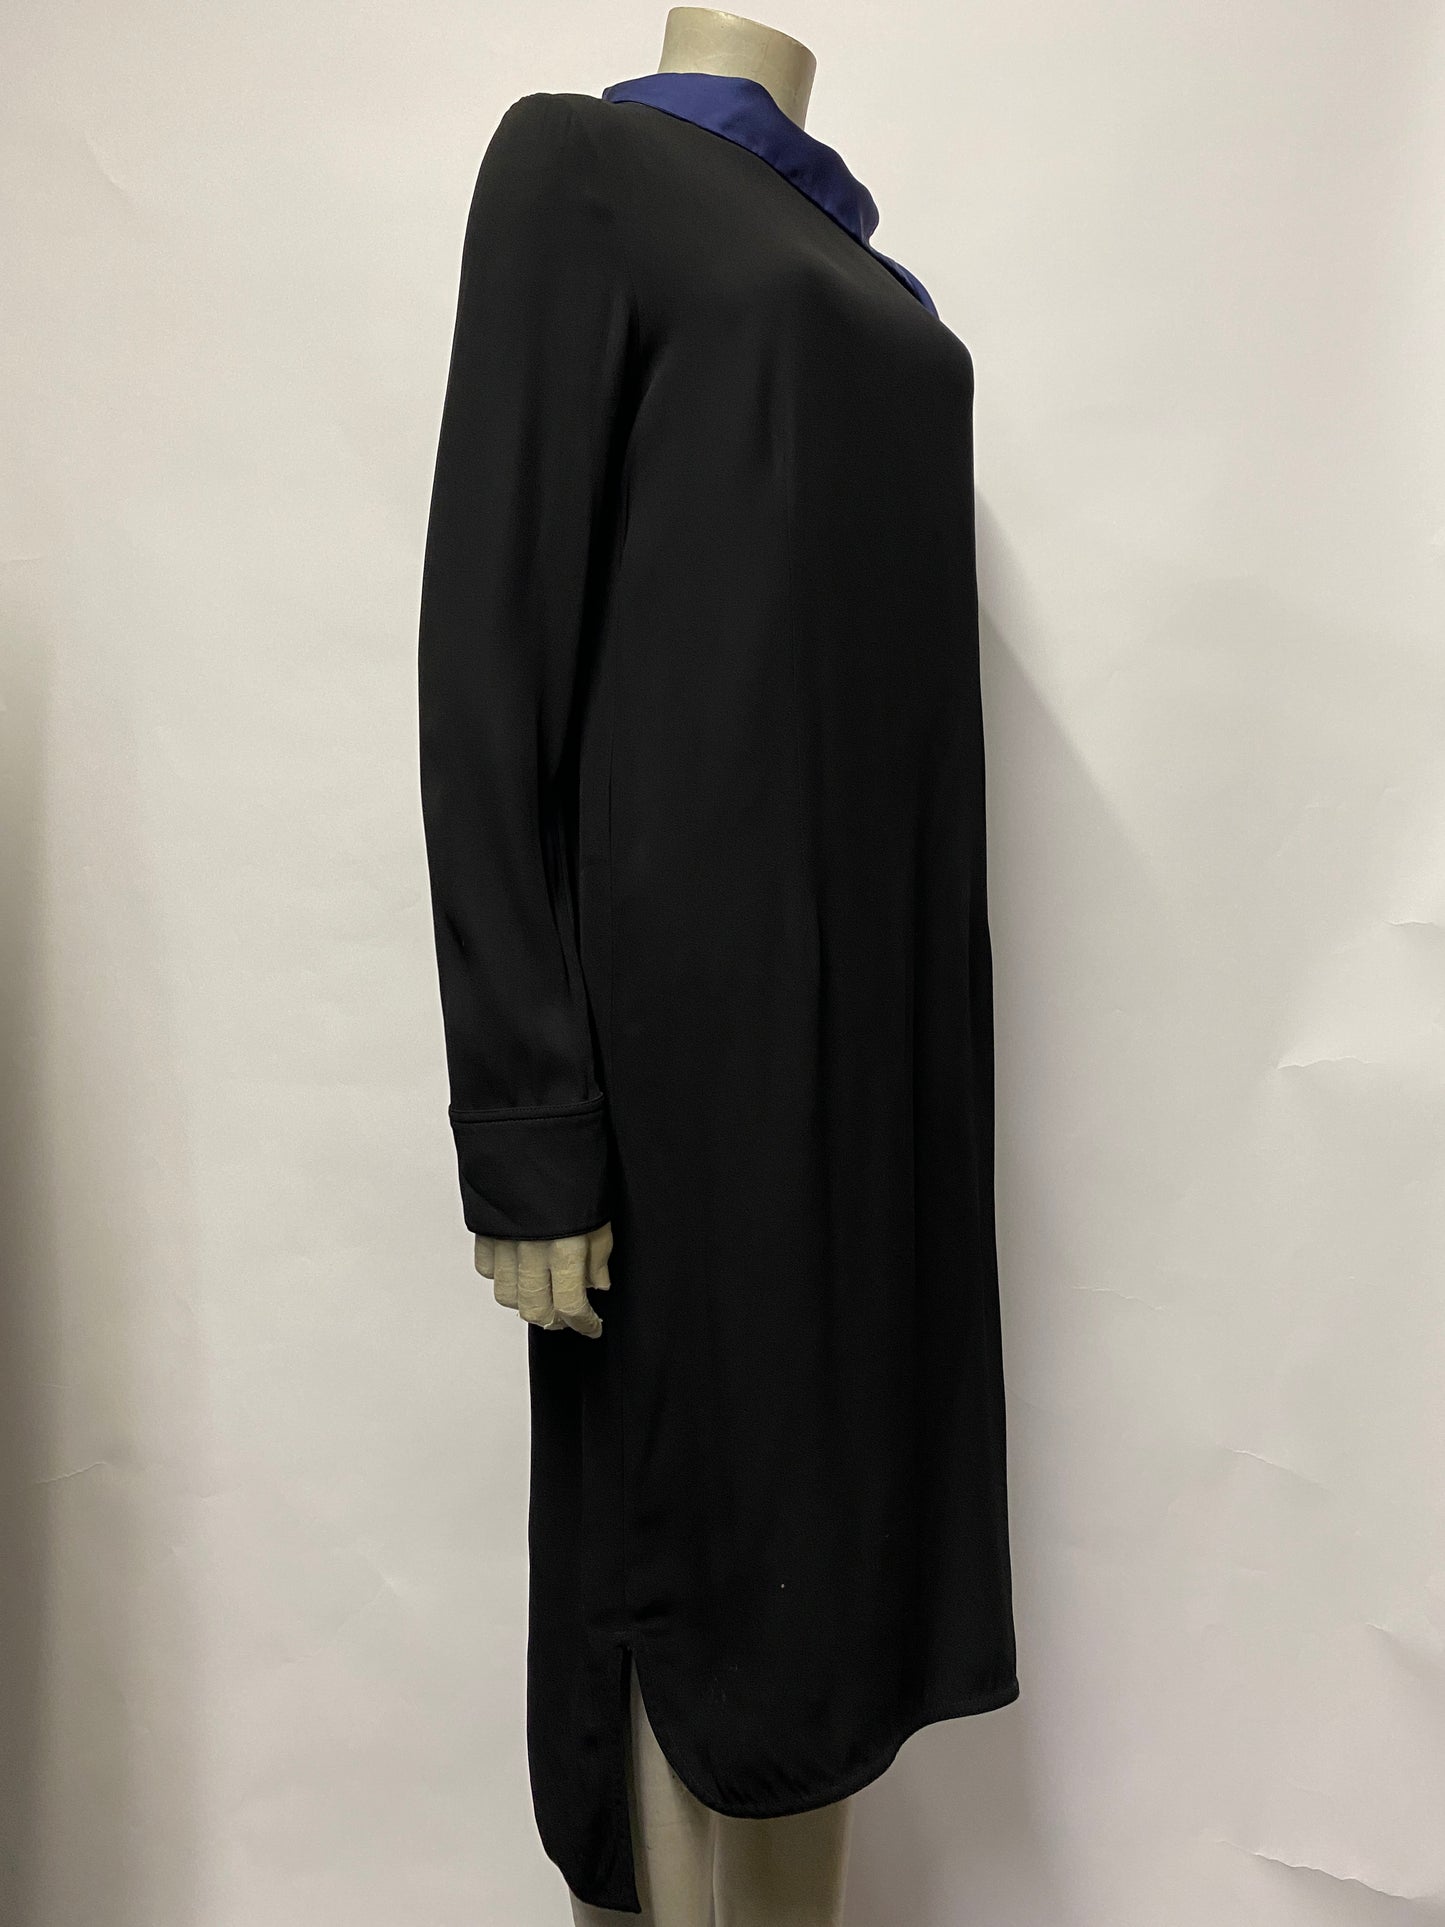 Marni Black & Navy Crepe Envers Satin  Dress 14